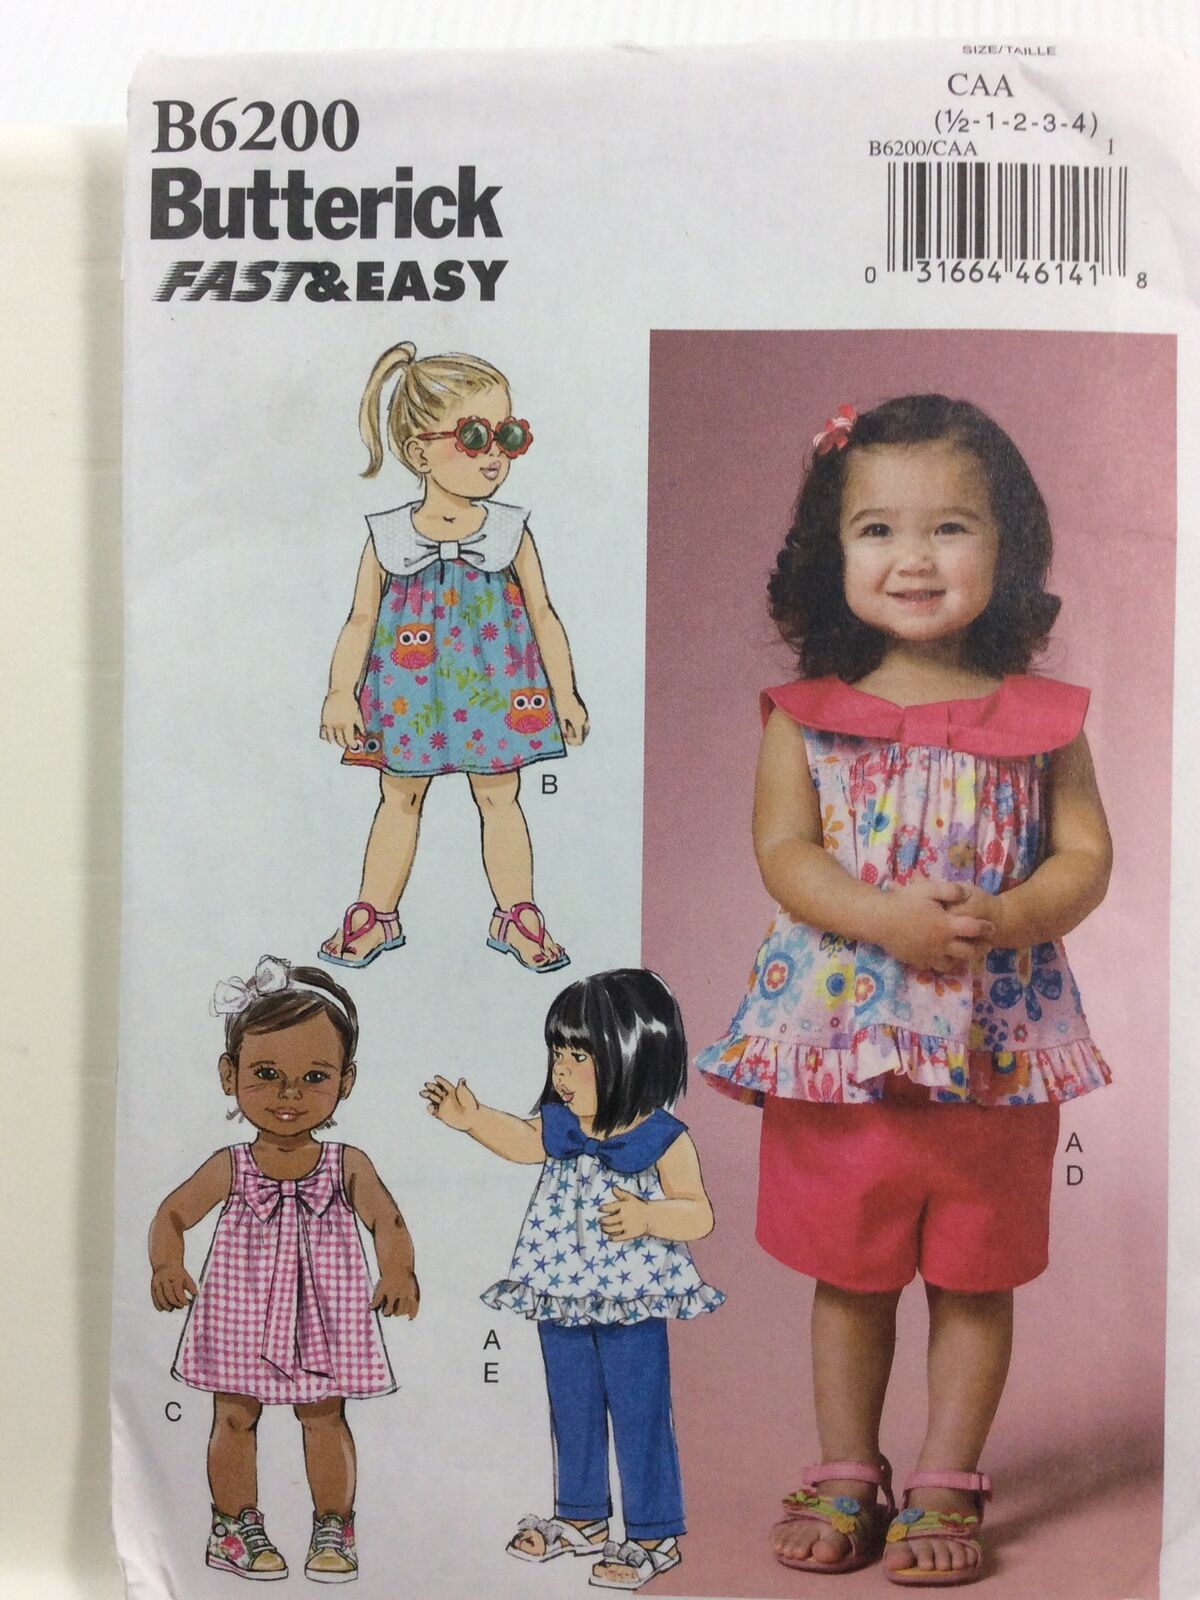 2015 Butterick B6200 Sewing Pattern Toddlers Top Dress Shorts Lot Sz 0.5 1 2 3 4